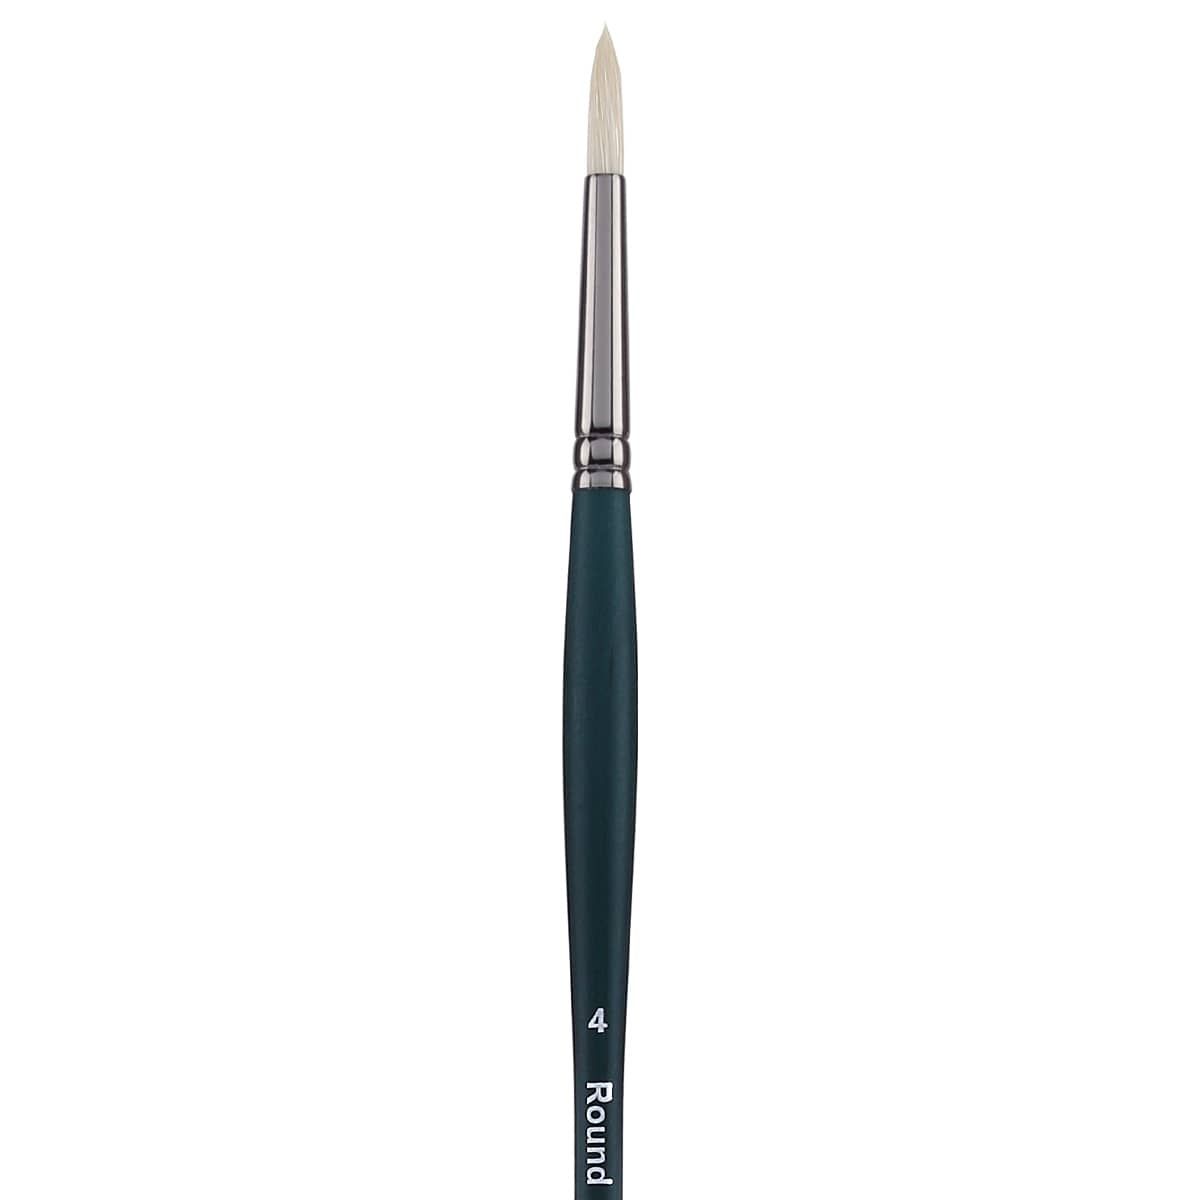 Imperial Professional Chungking Hog Bristle Brush, Round Size #4